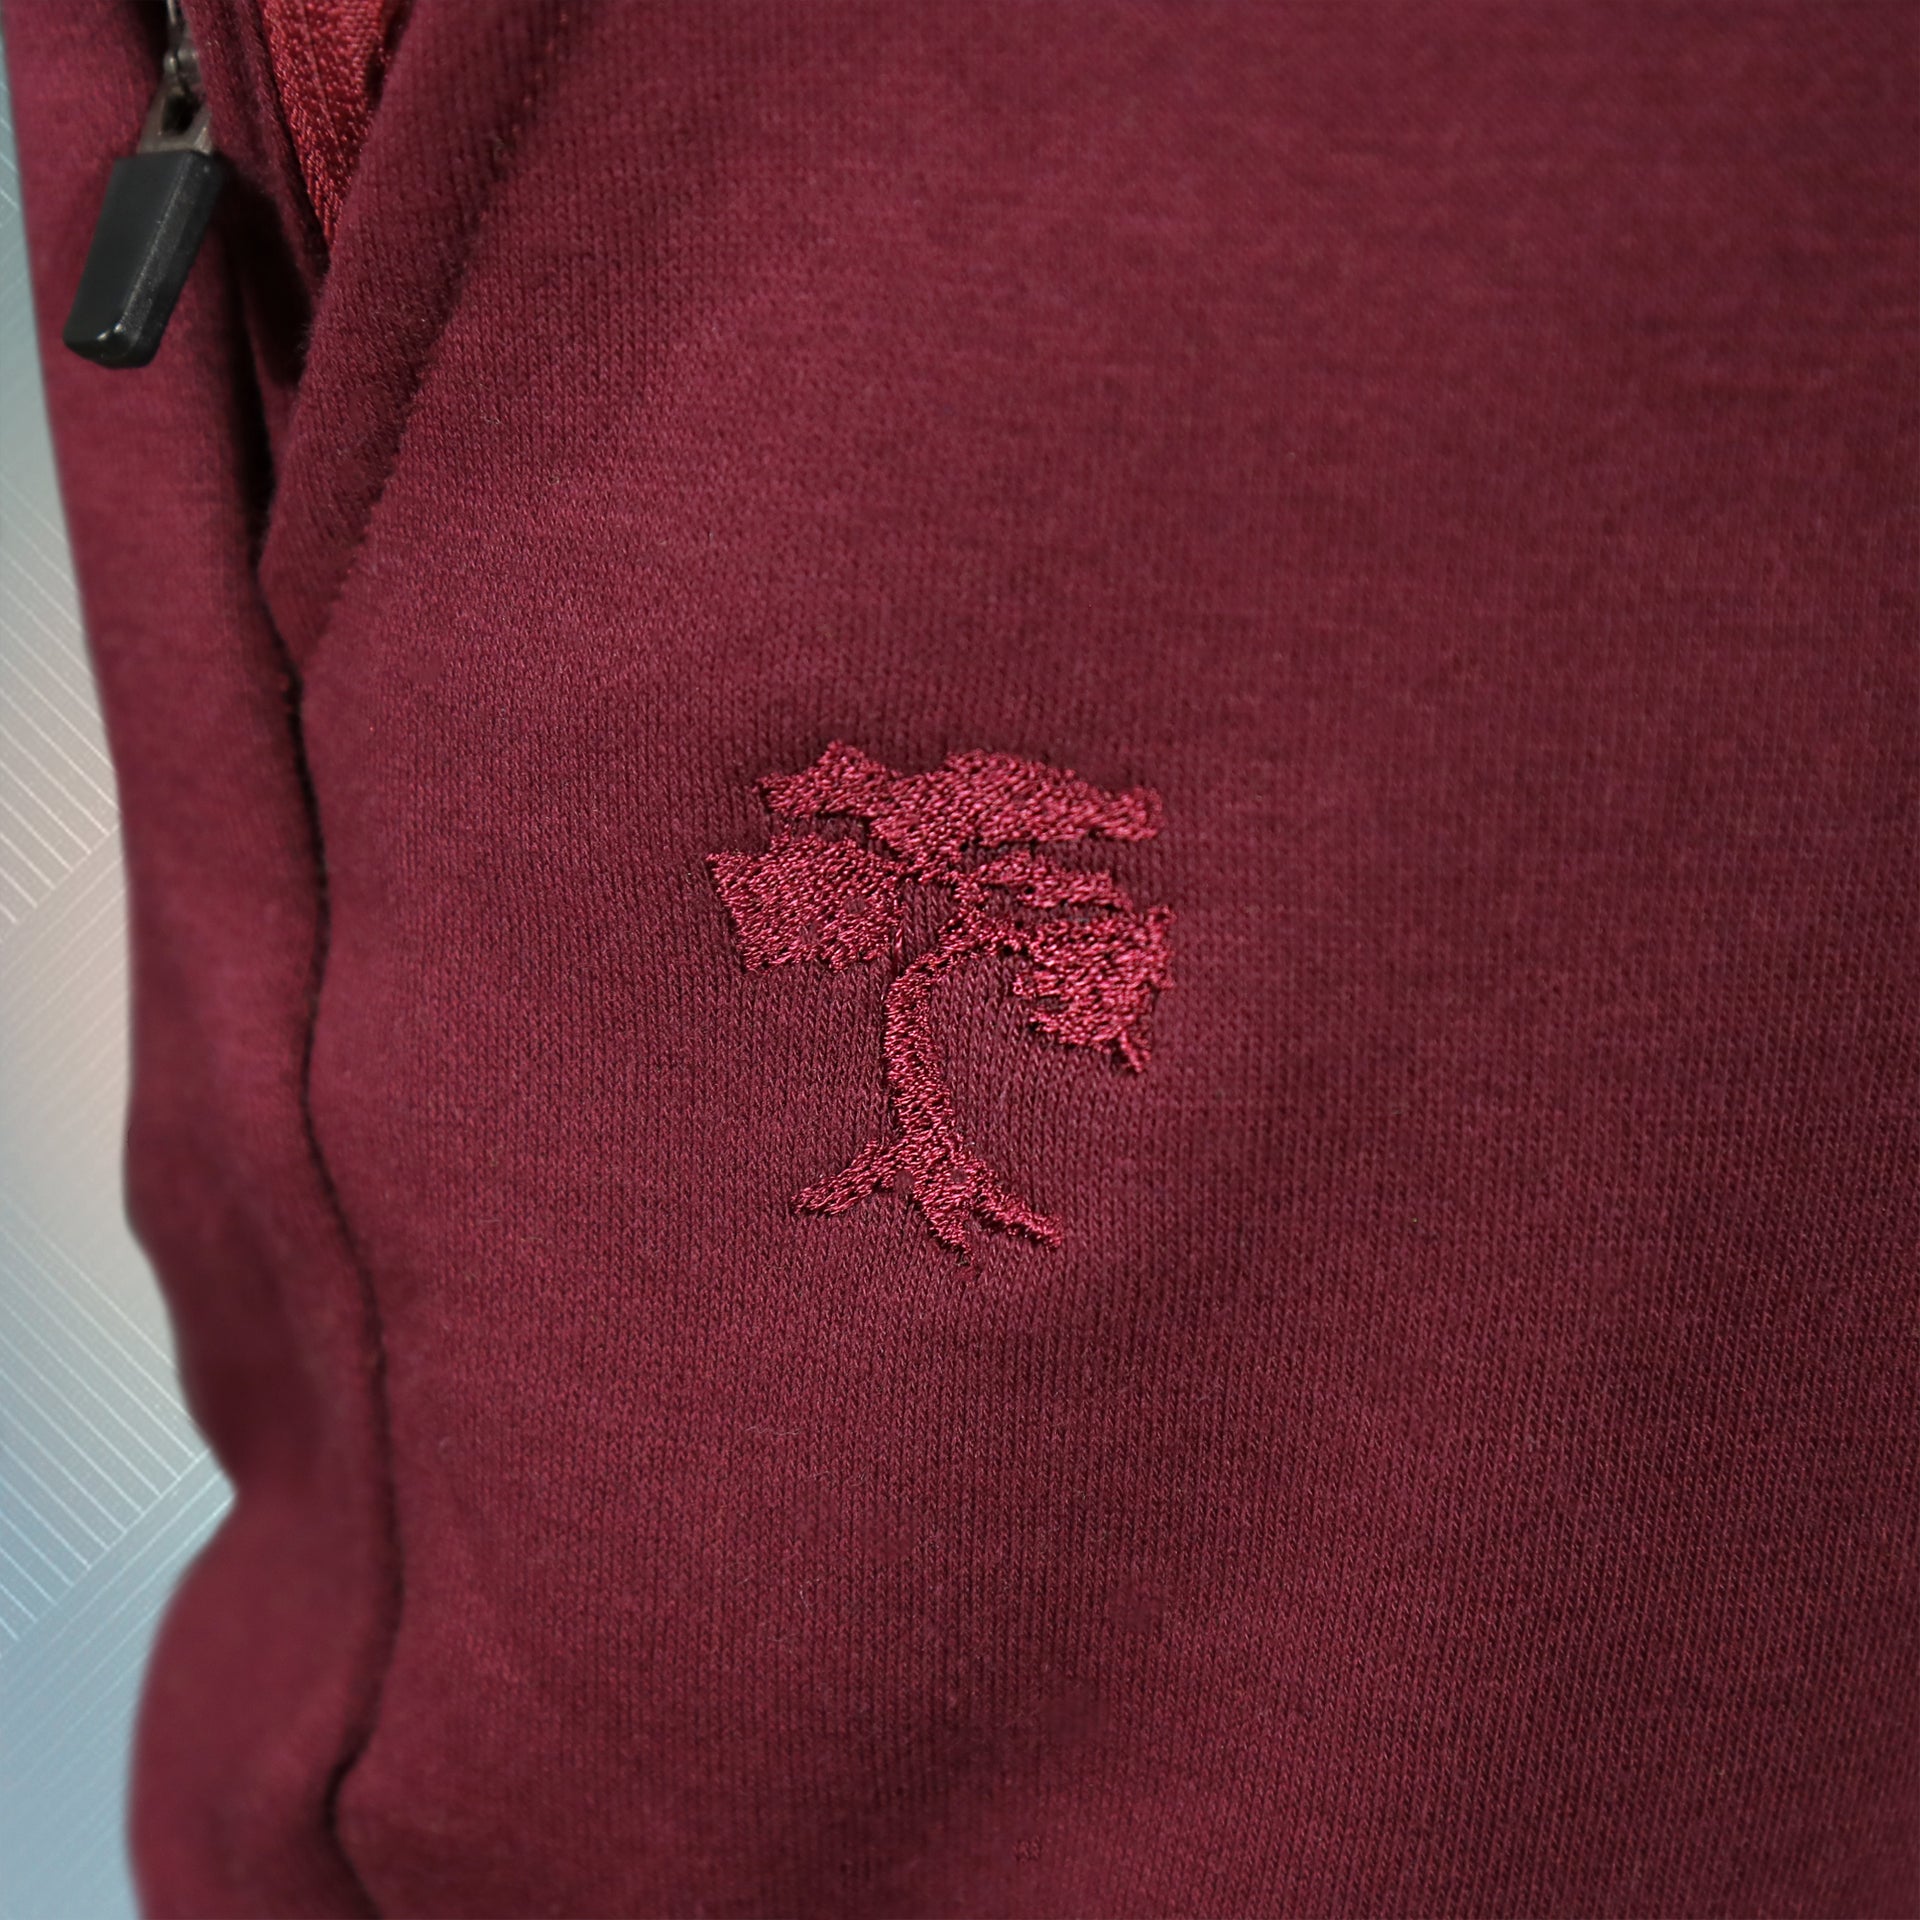 bonsai tree logo on the Maroon Unbasic Fleece Stash Pocket Sunset Park Tapered Jogger Pants | Fleece Dark Red Sweatpants